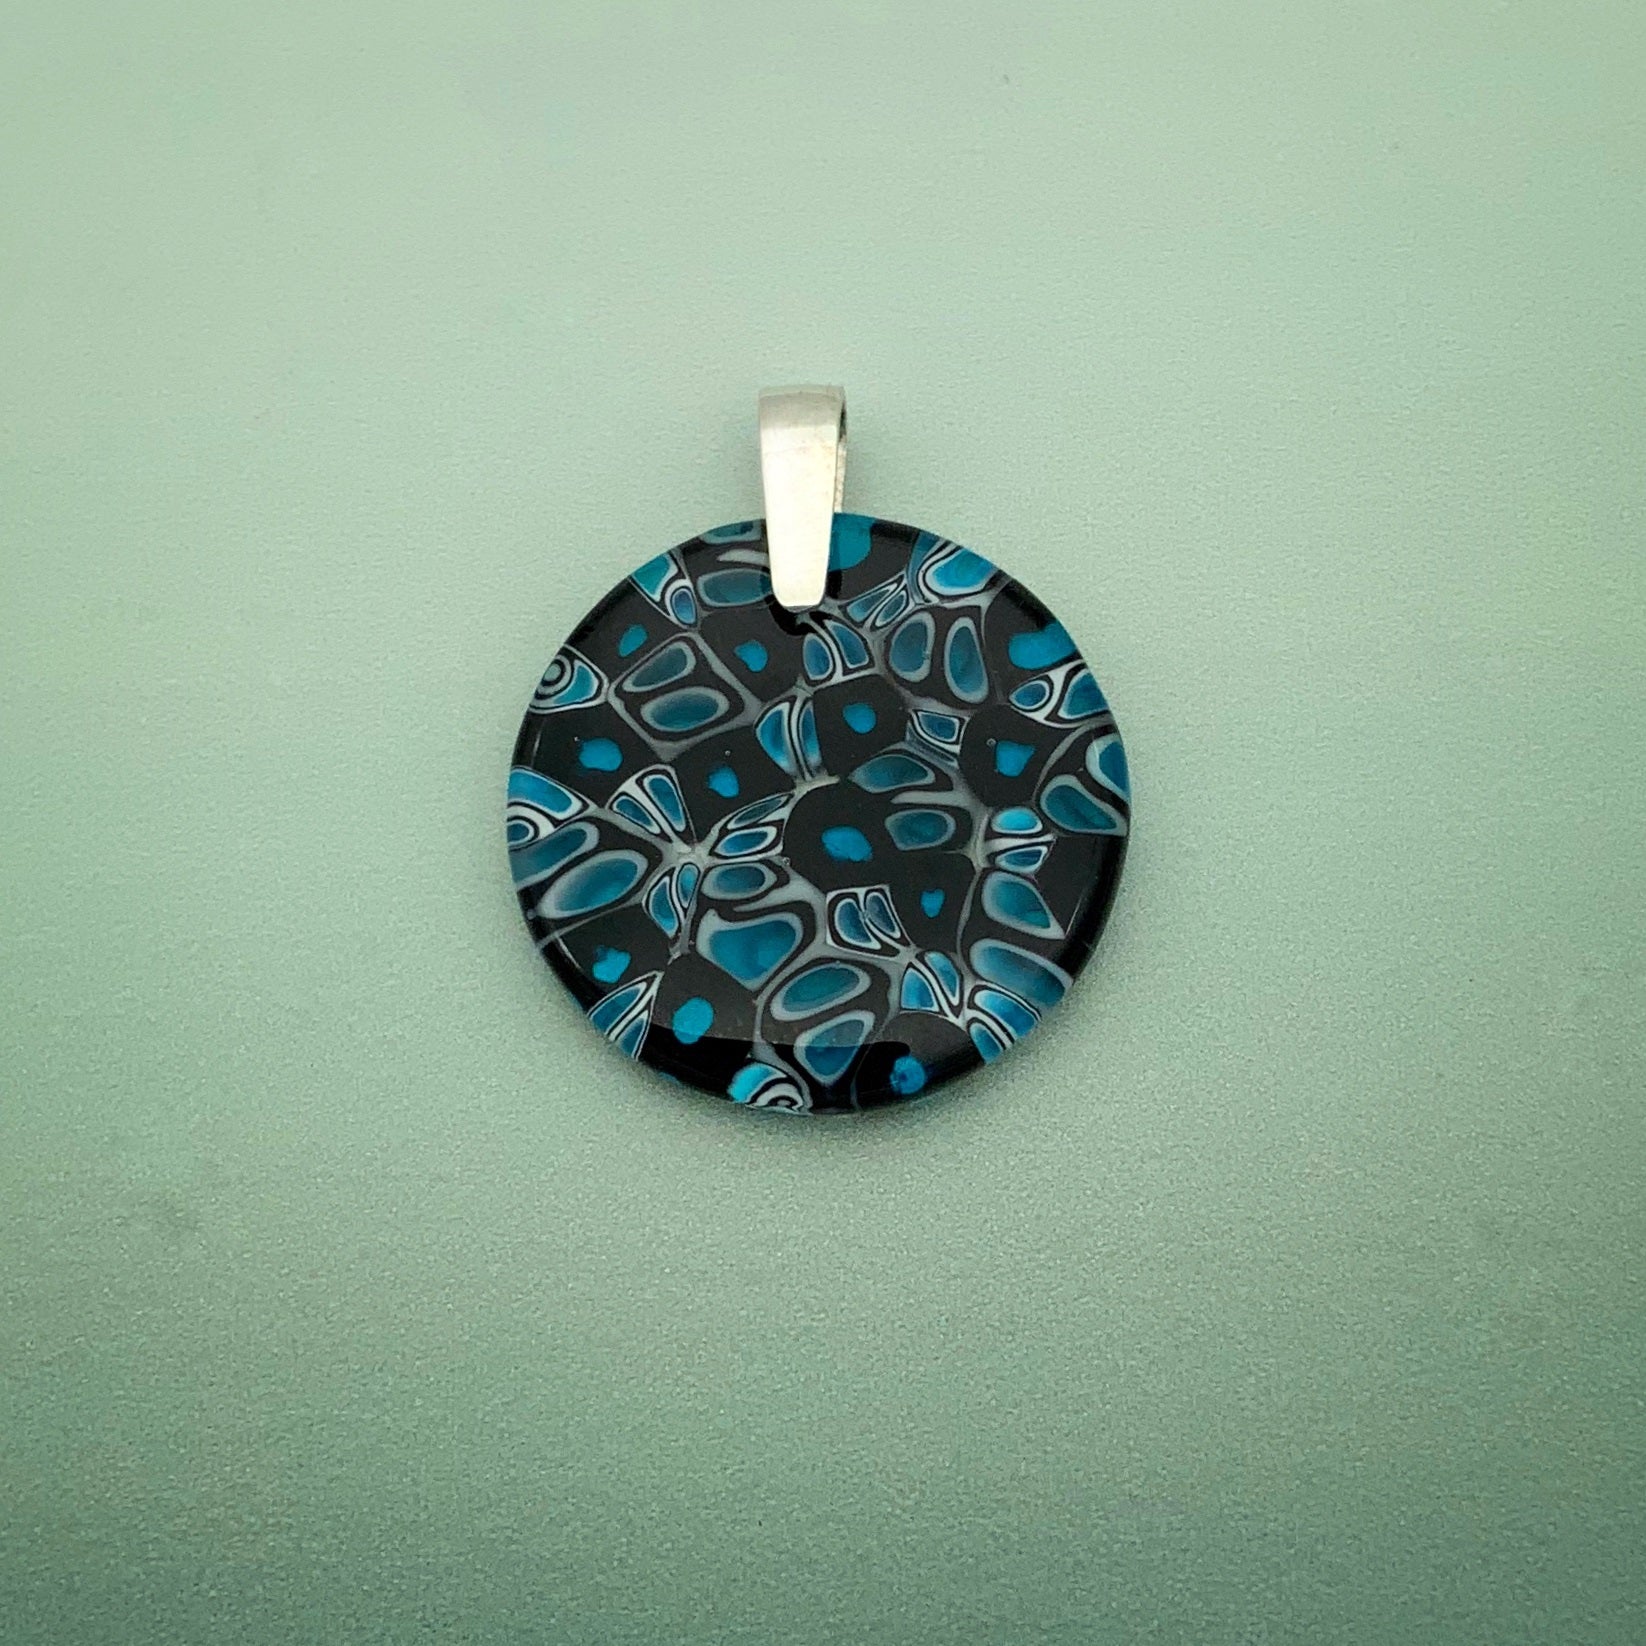 Murrini turquoise and black 35mm round glass pendant